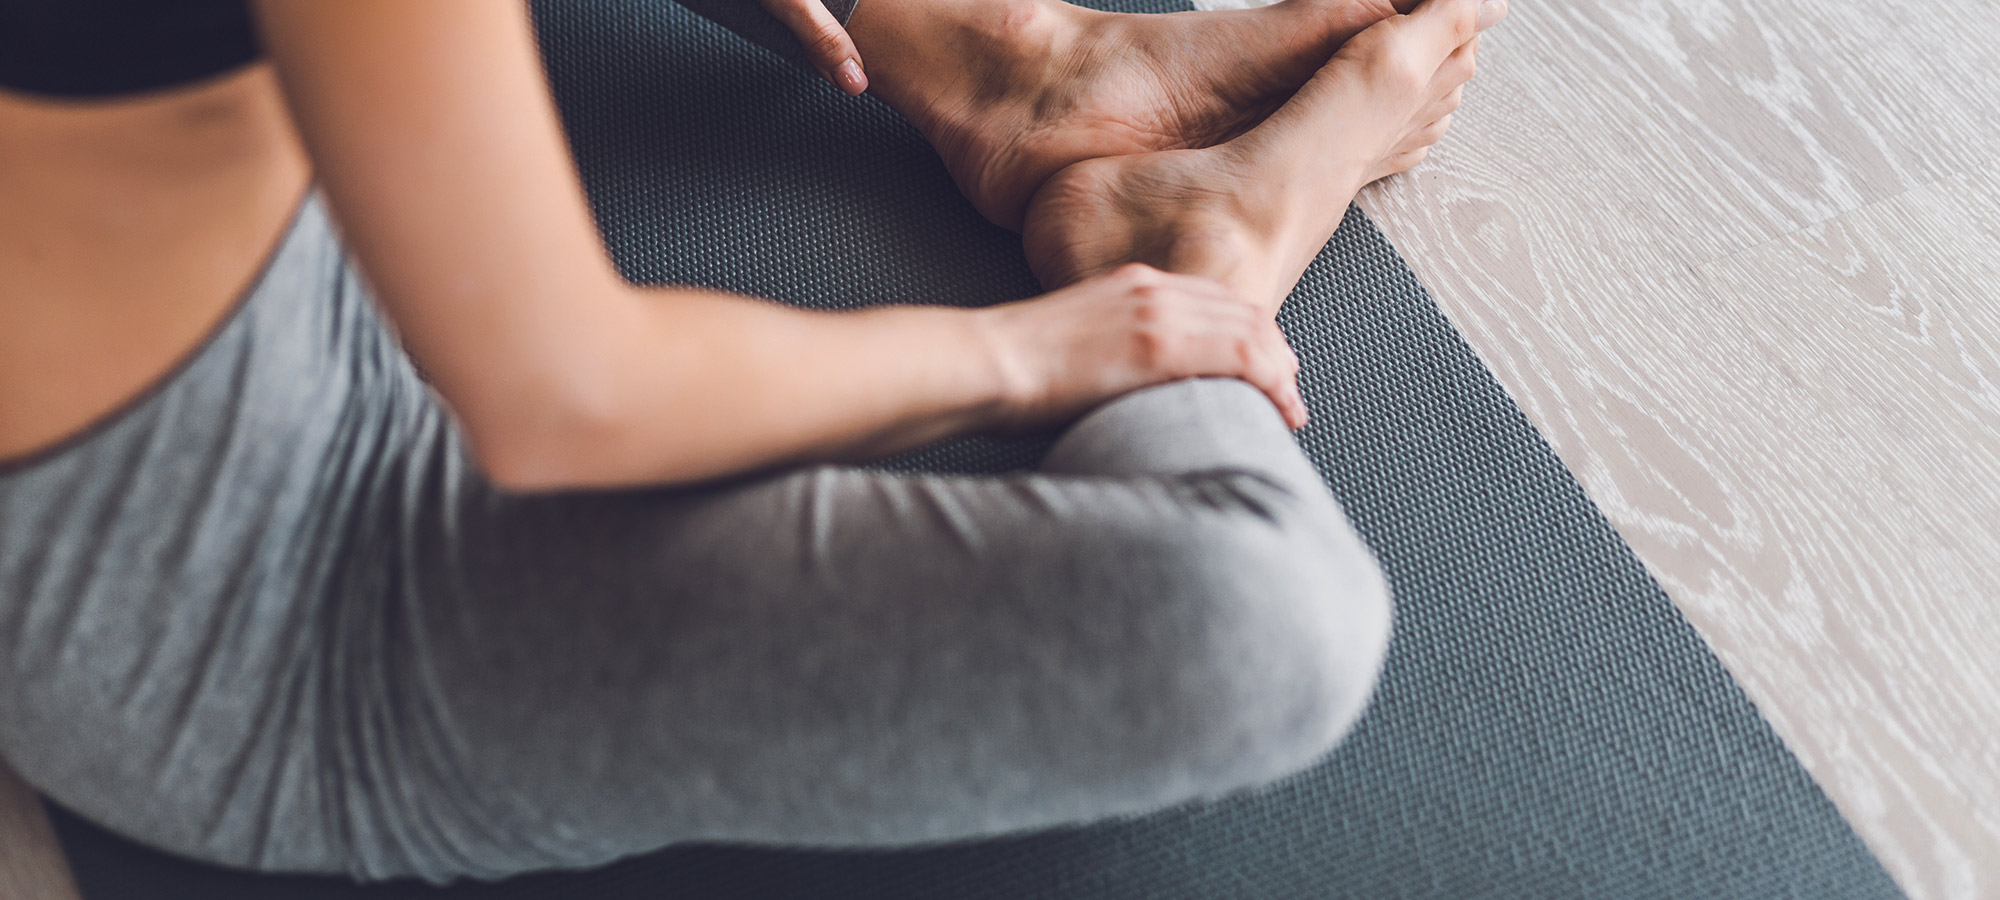 donna seduta a terra tappetino yoga piedi nudi leggins